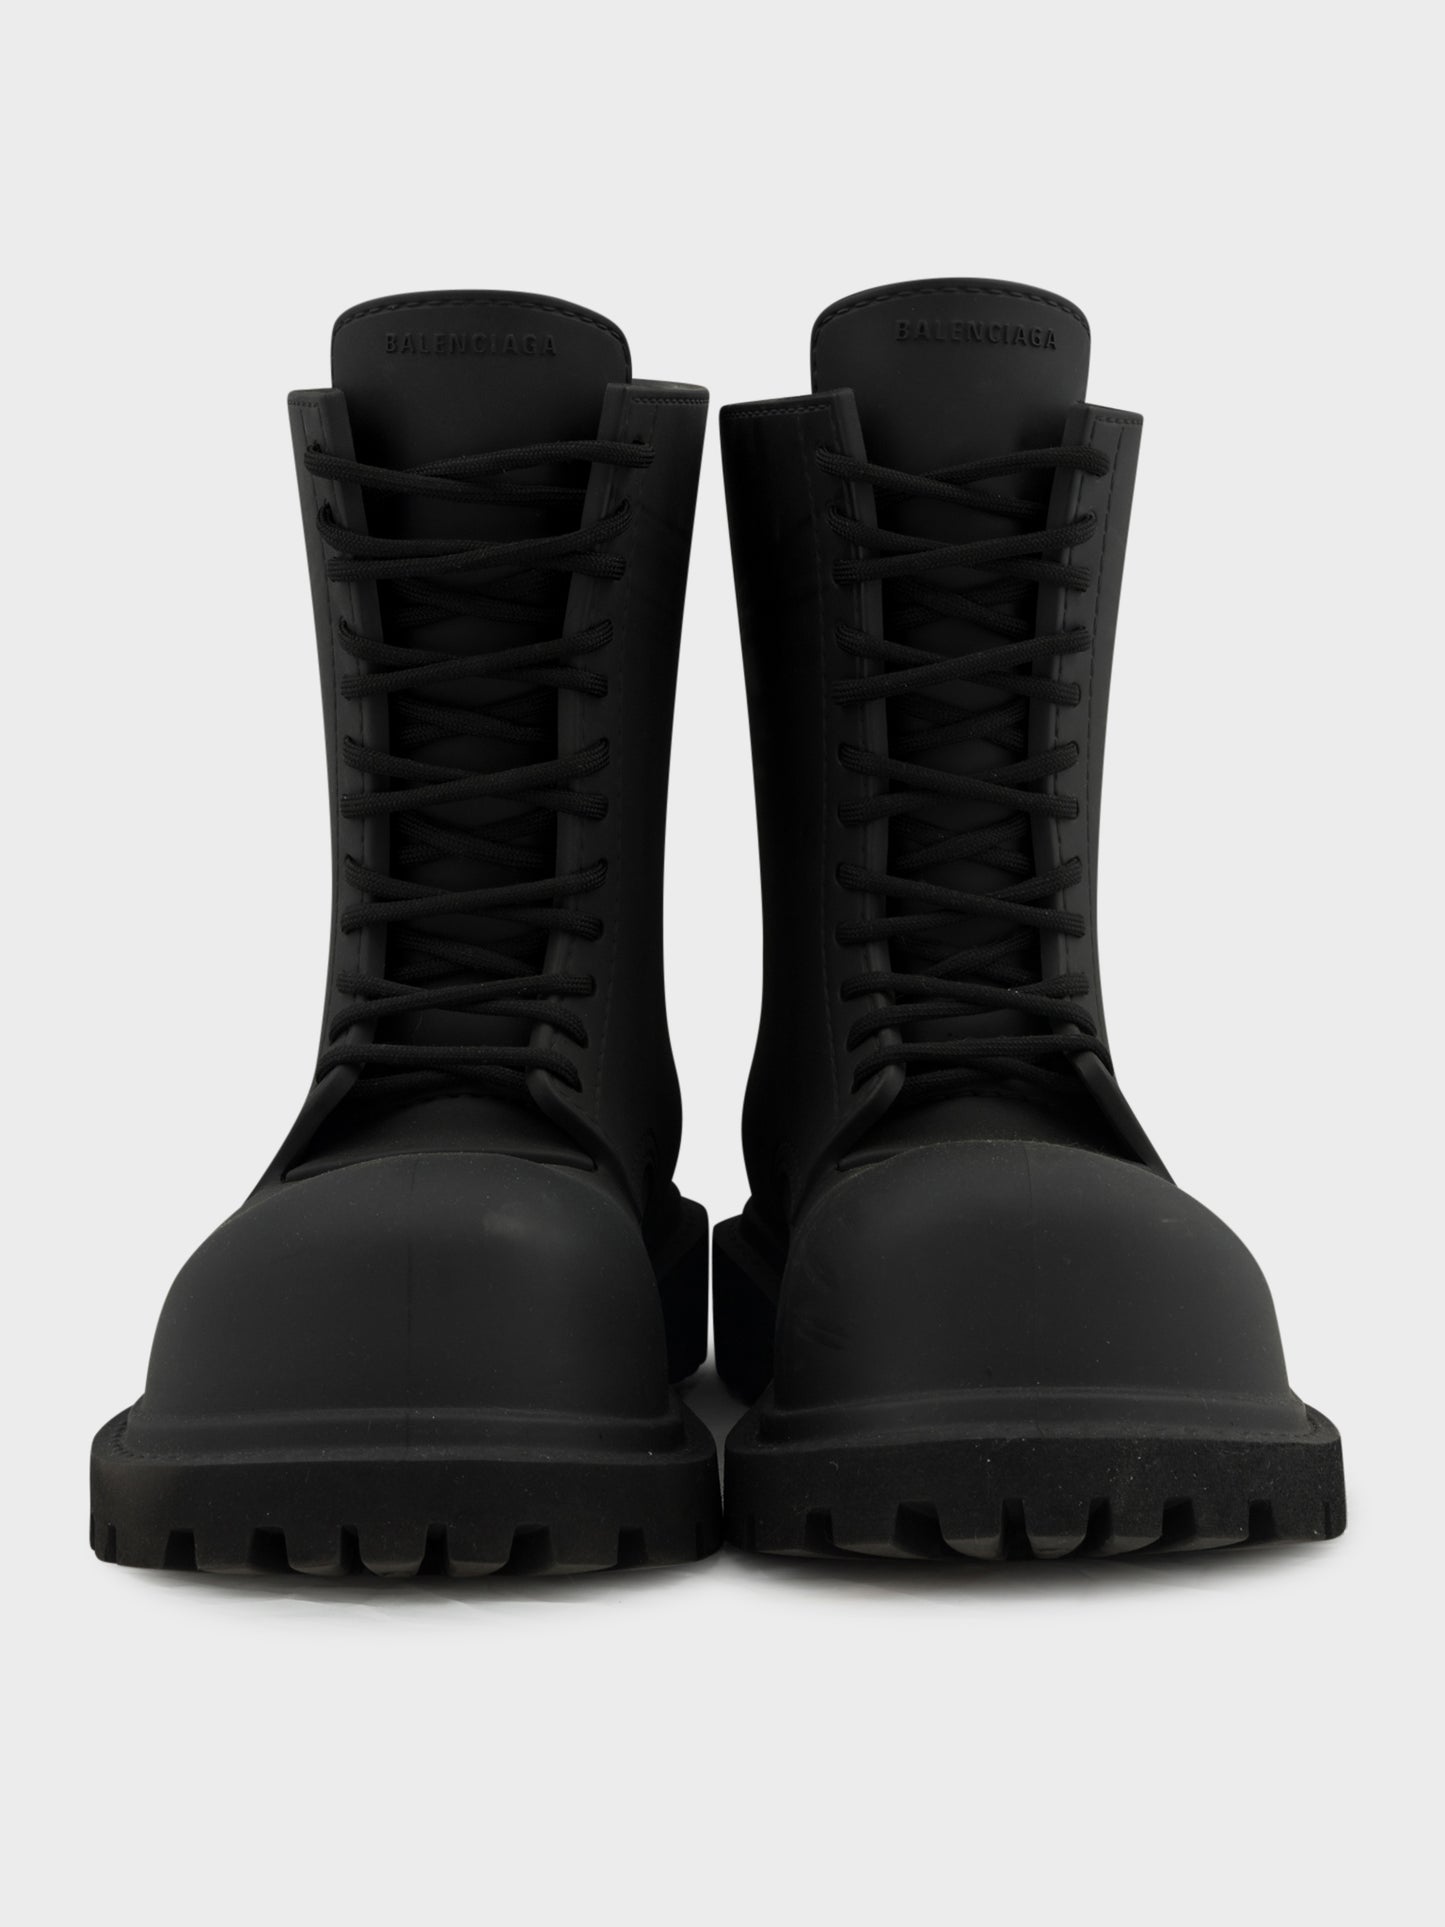 Boots / wellingtons Balenciaga - IetpShops Denmark